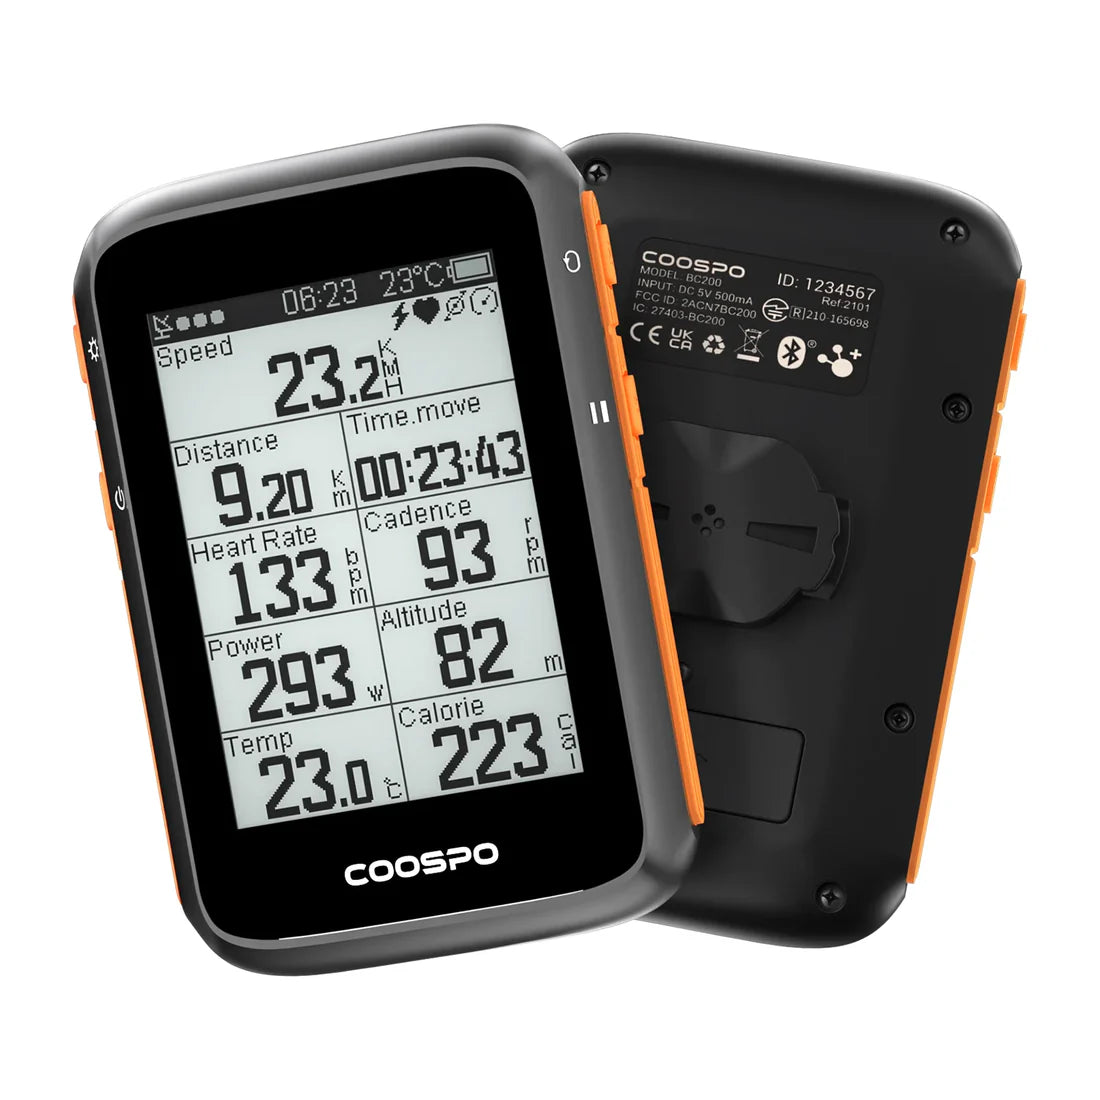 COOSPO BC200 Computer GPS Bike